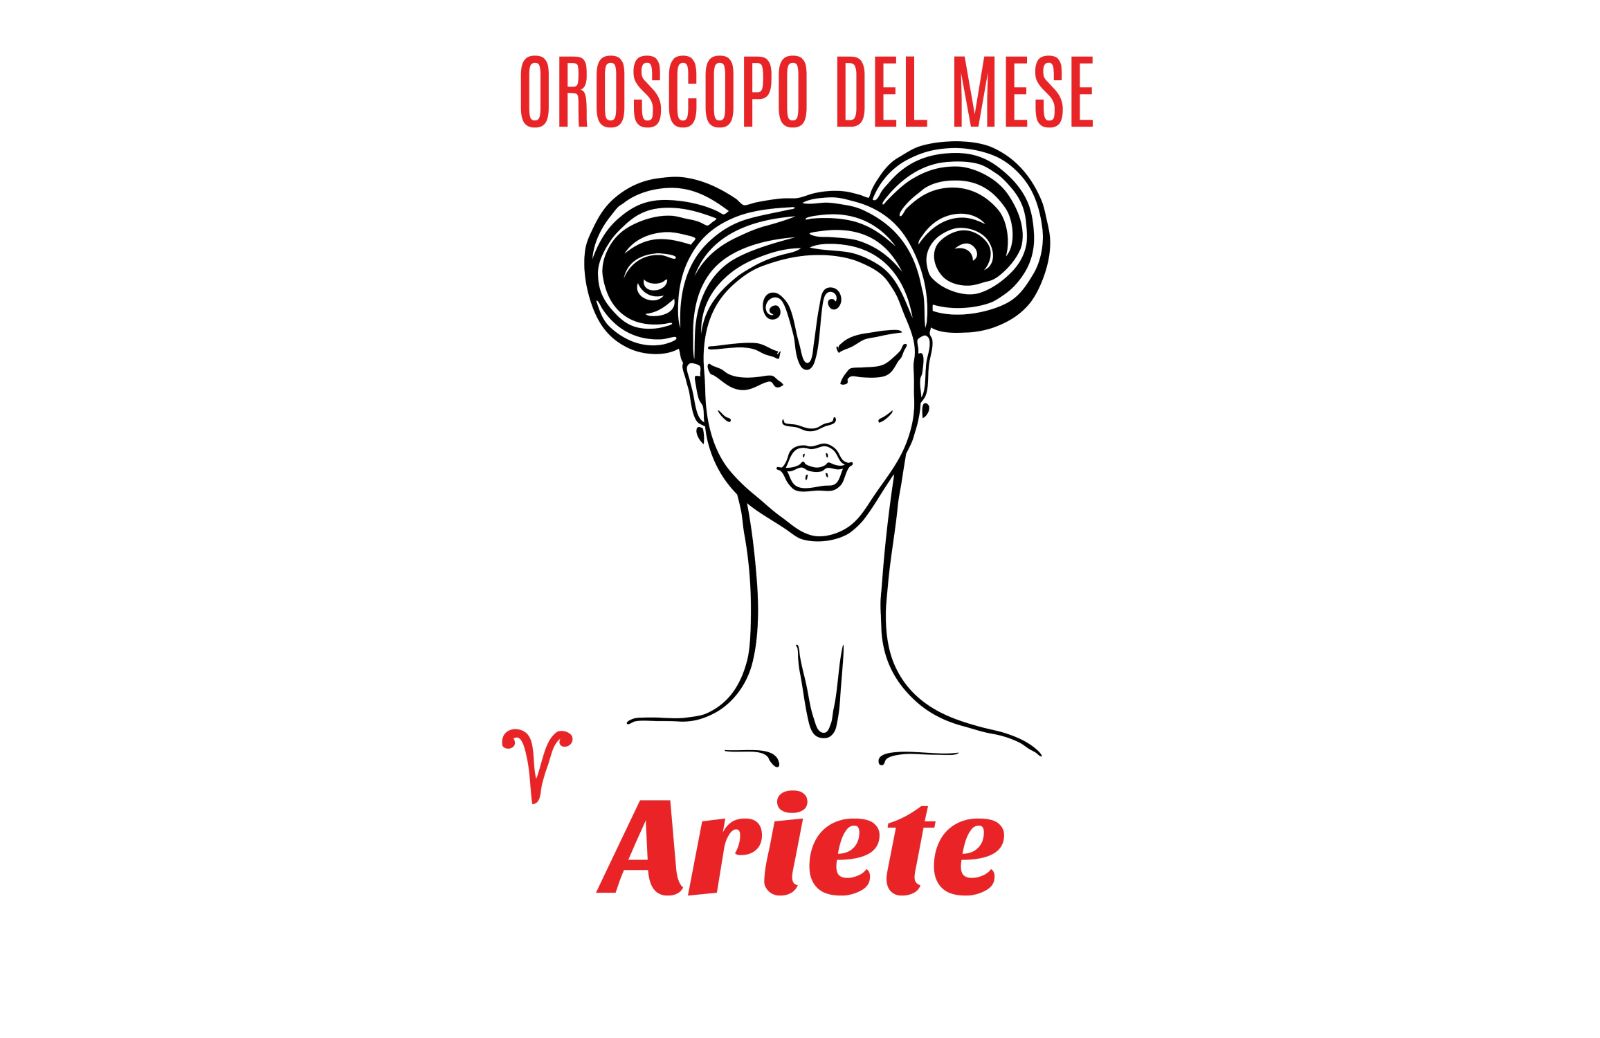 Oroscopo del mese: Ariete - ottobre 2019